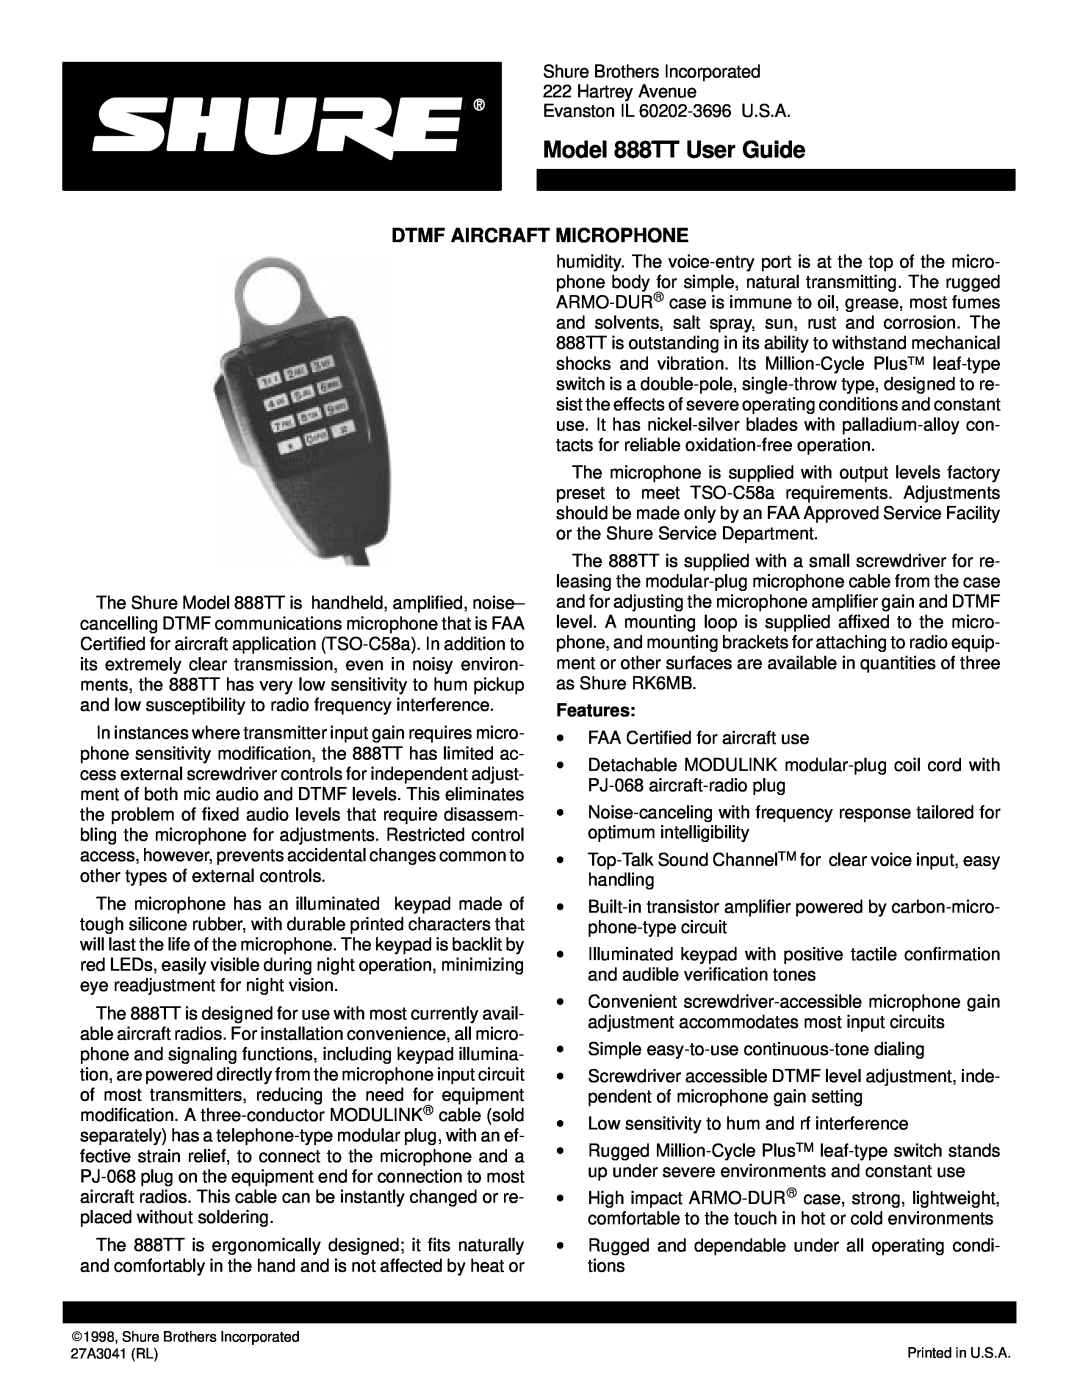 Shure manual Dtmf Aircraft Microphone, Model 888TT User Guide 